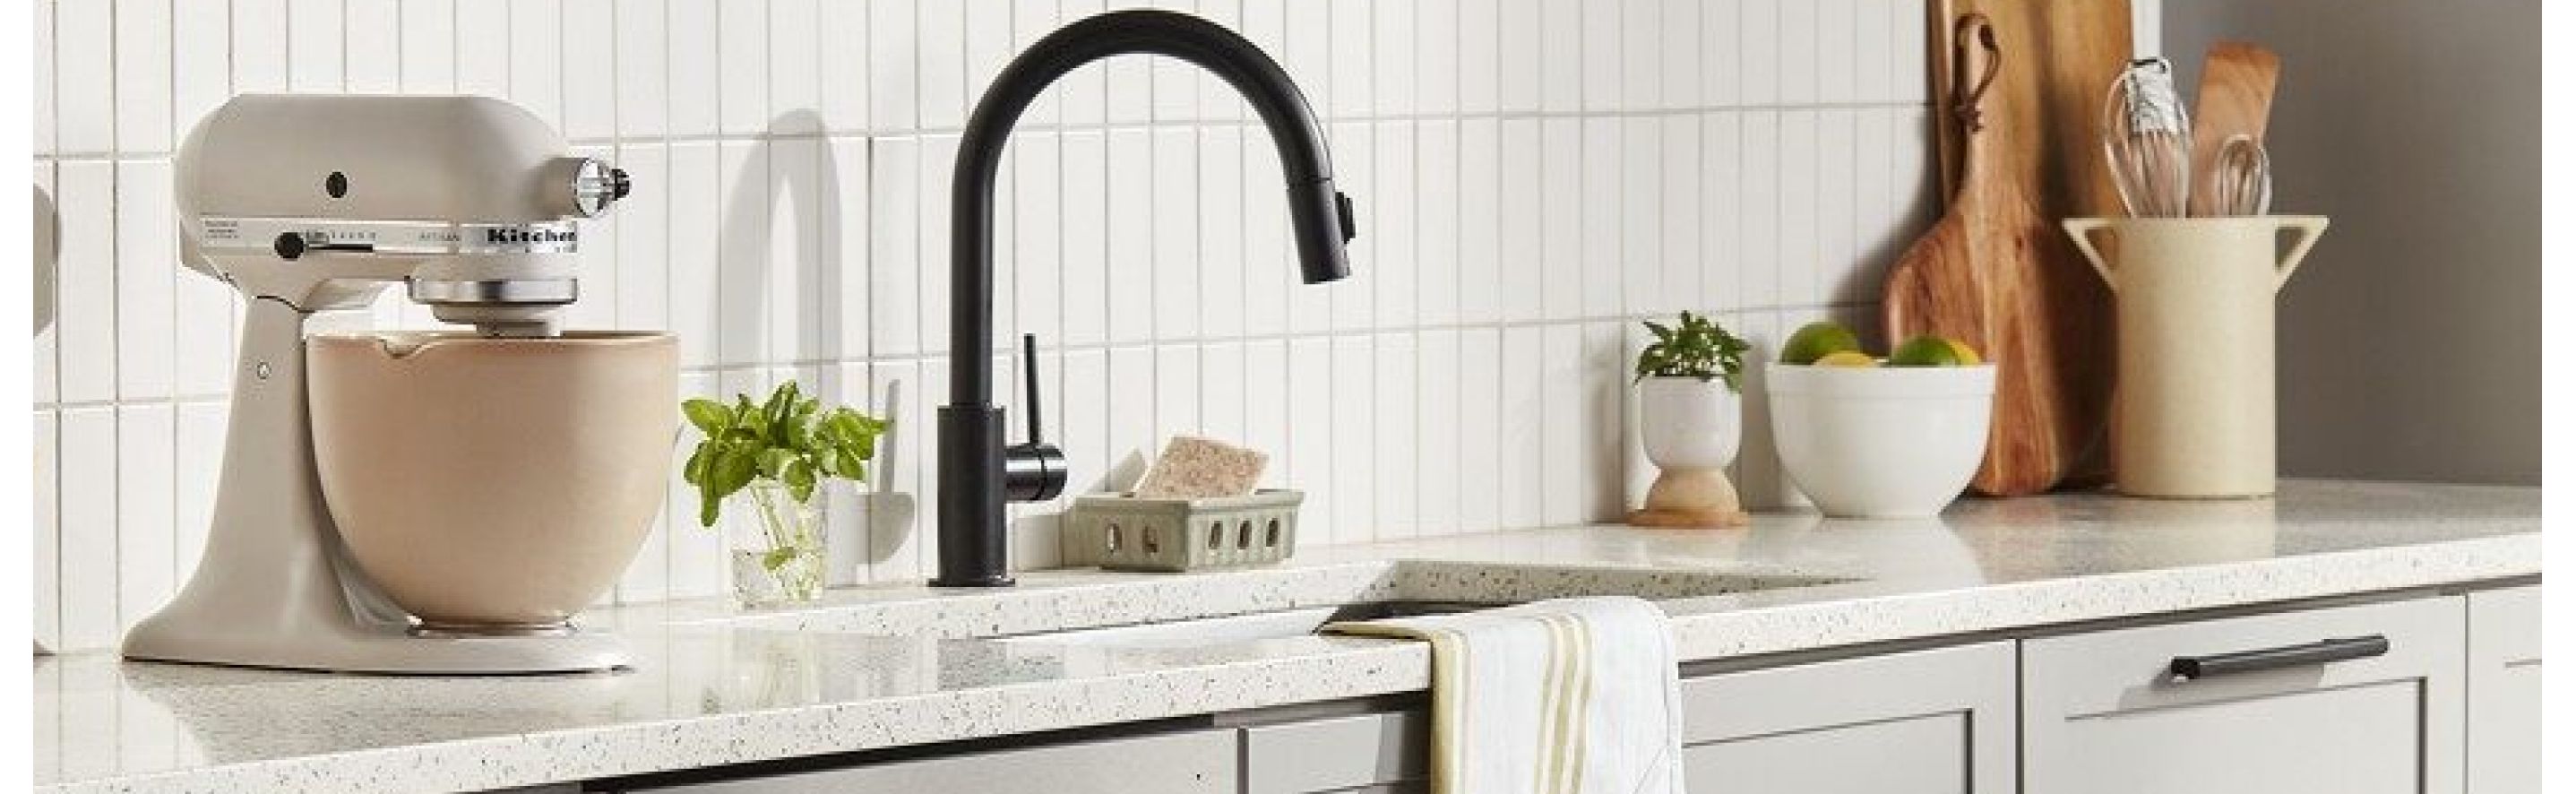 KitchenAid® stand mixer on a countertop next to a kitchen sink